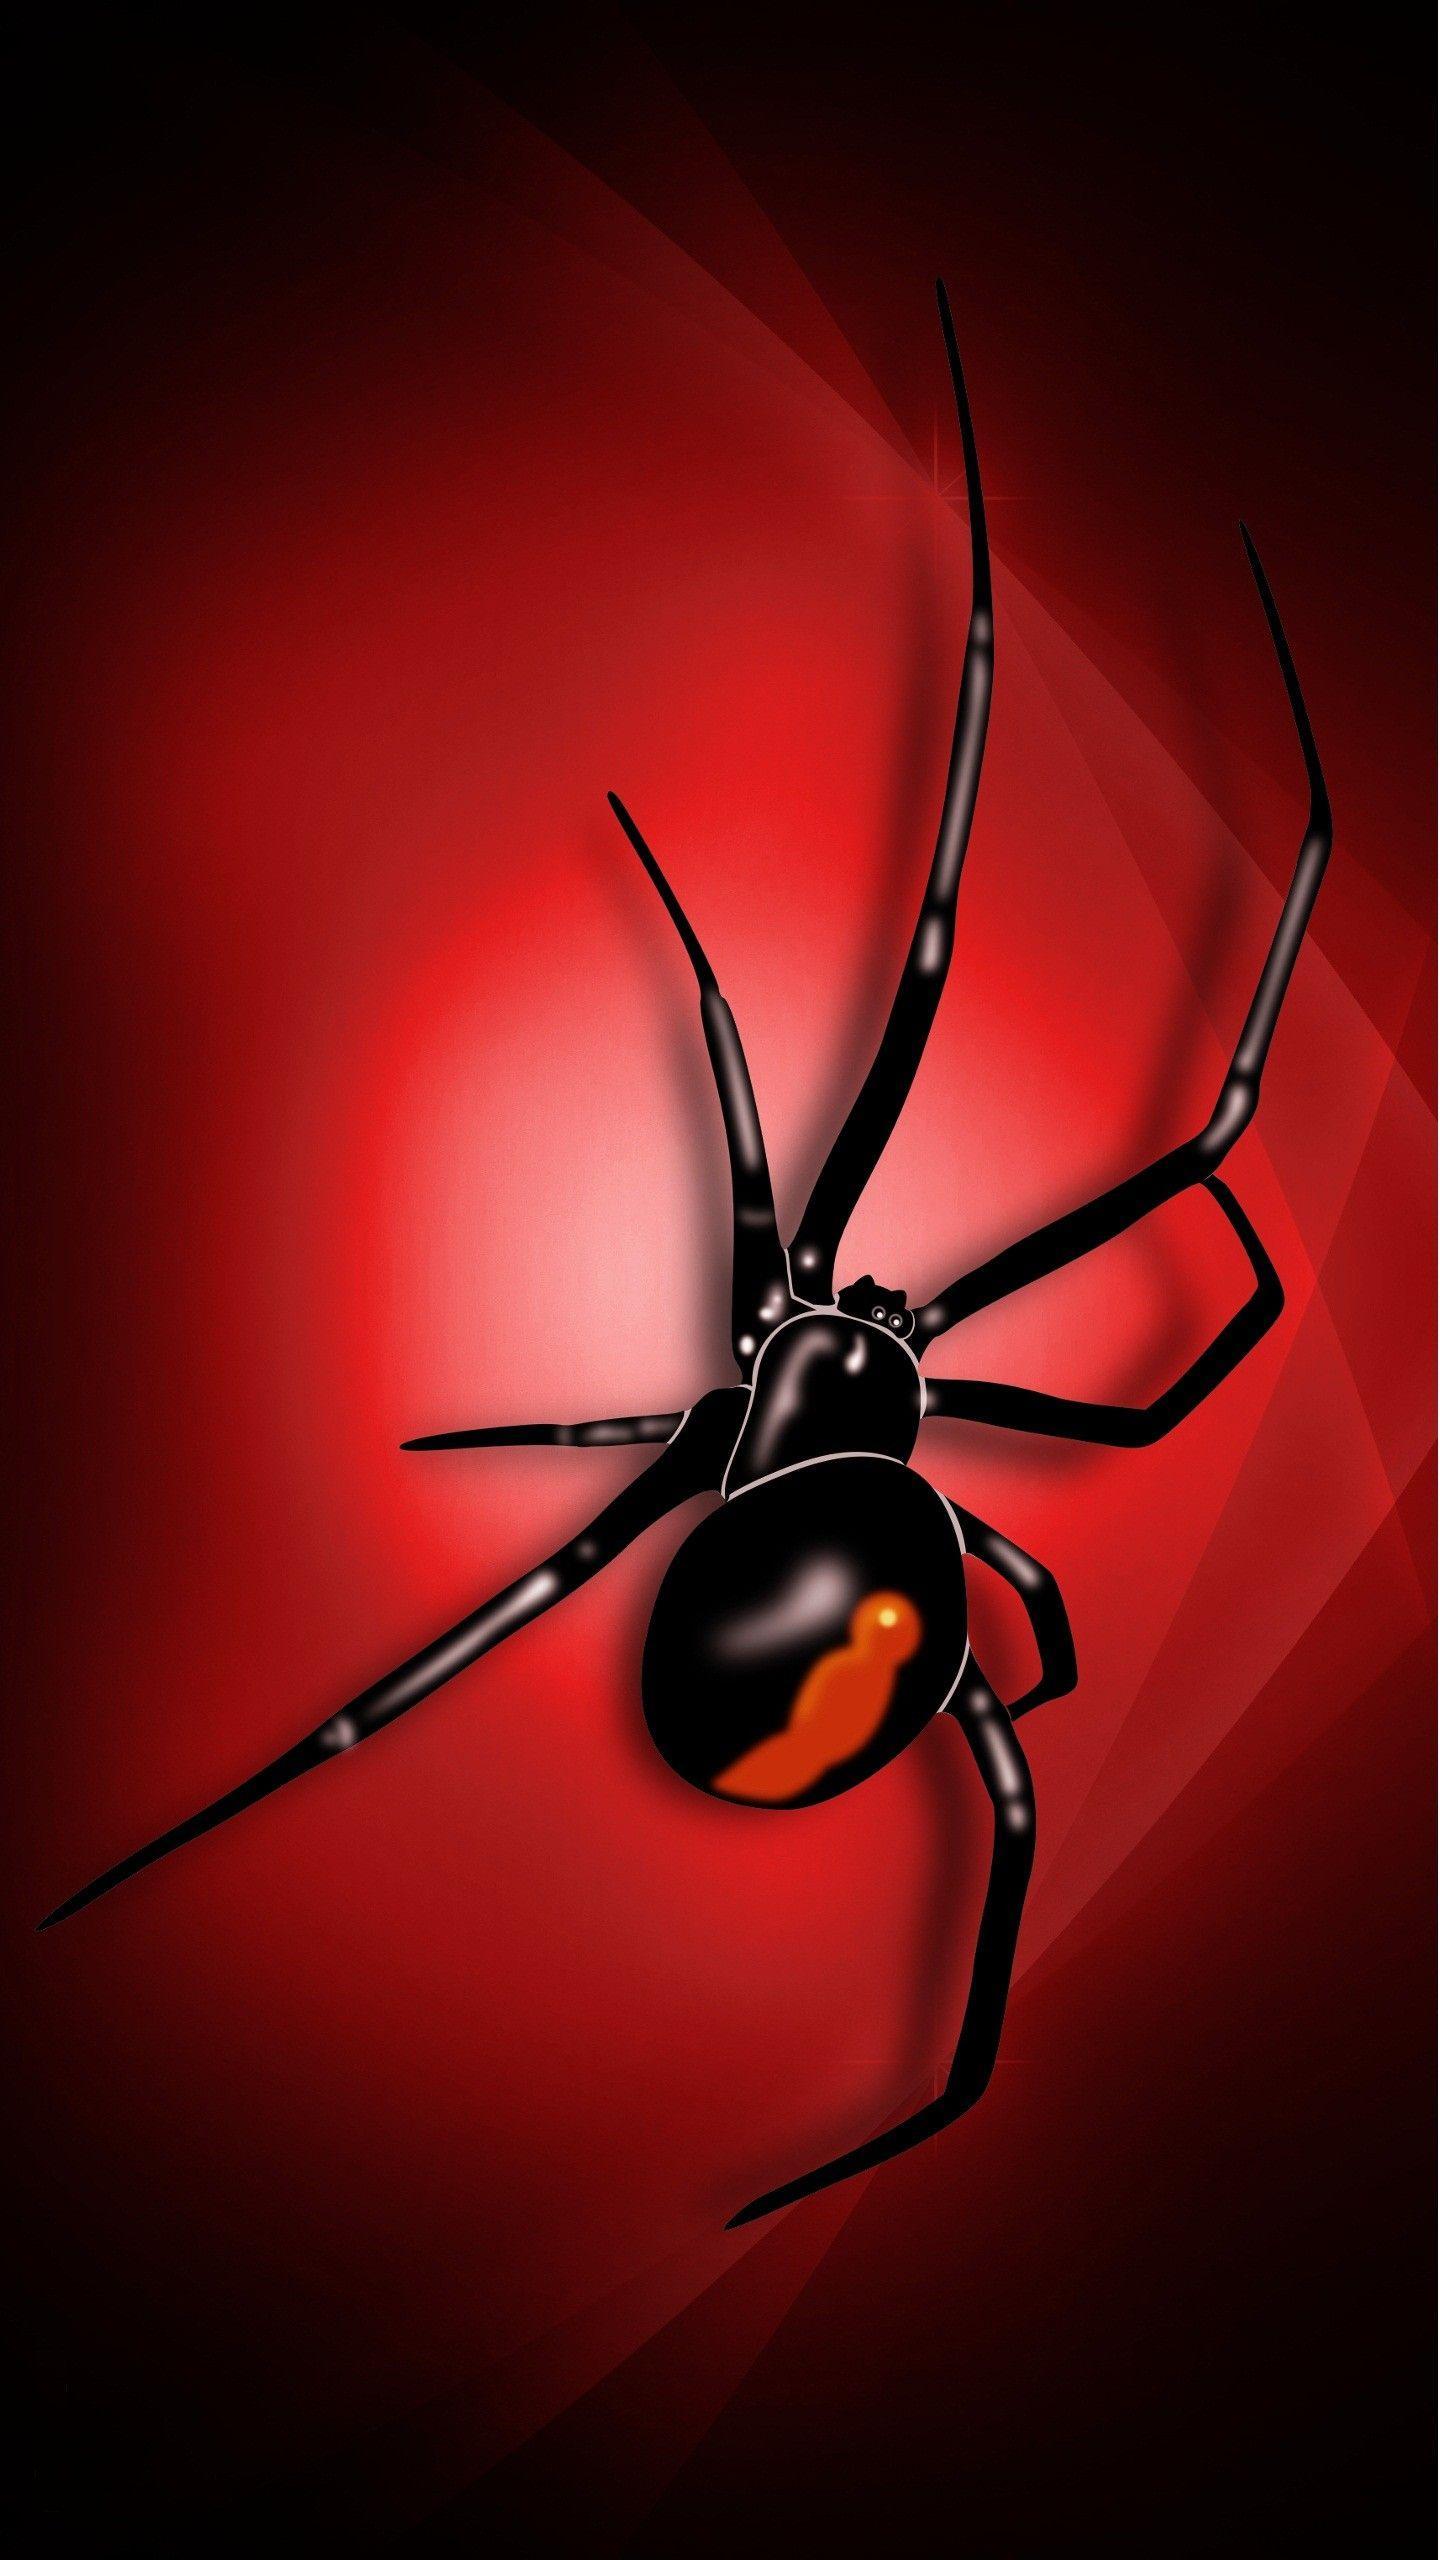 Black Widow Spiders Wallpaper For Pc, Black Widow Spiders, Animal